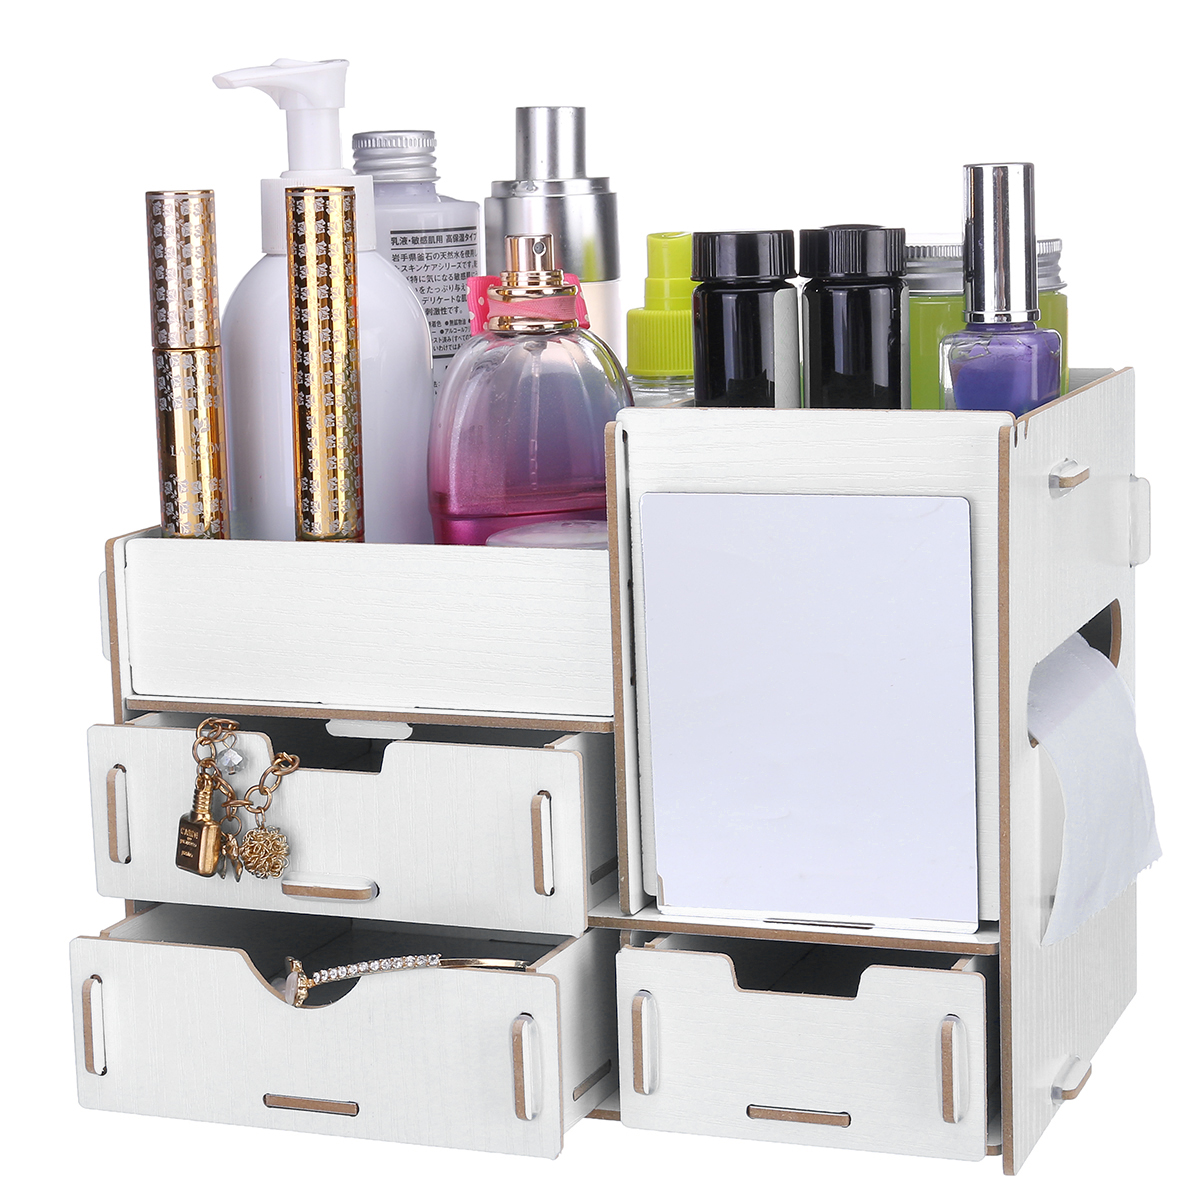 Makeup-Organizer-with-Mirror-Drawer-DIY-Desktop-Creative-Wooden-Storage-Box-Home-Dormitory-Desktop-S-1758574-17